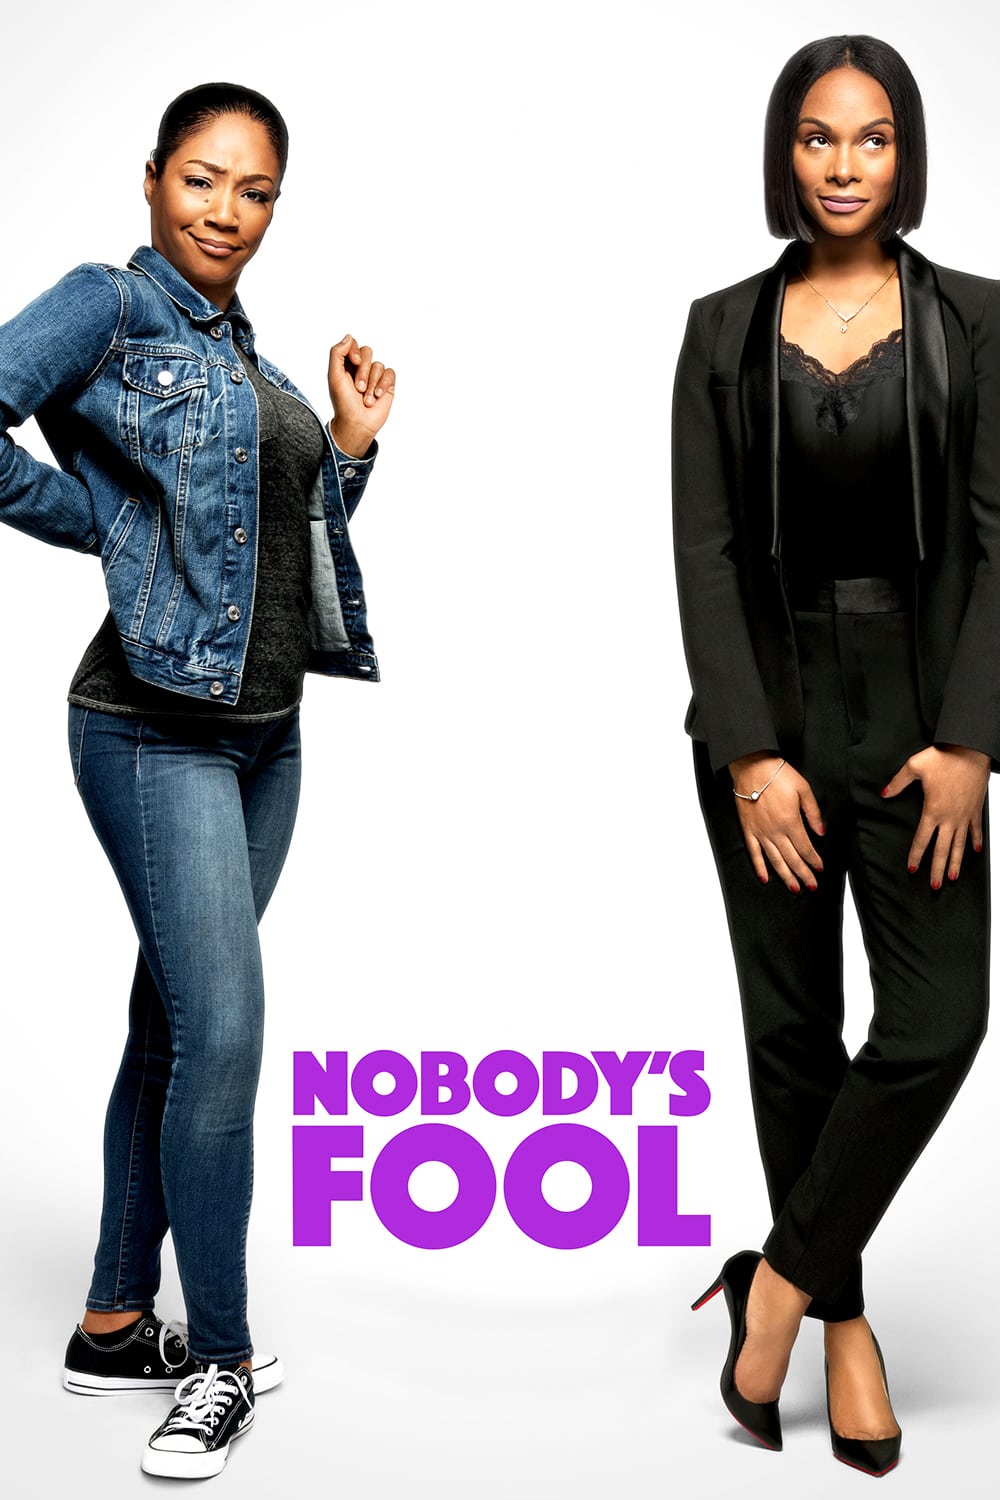 Plakat von "Nobody's Fool"